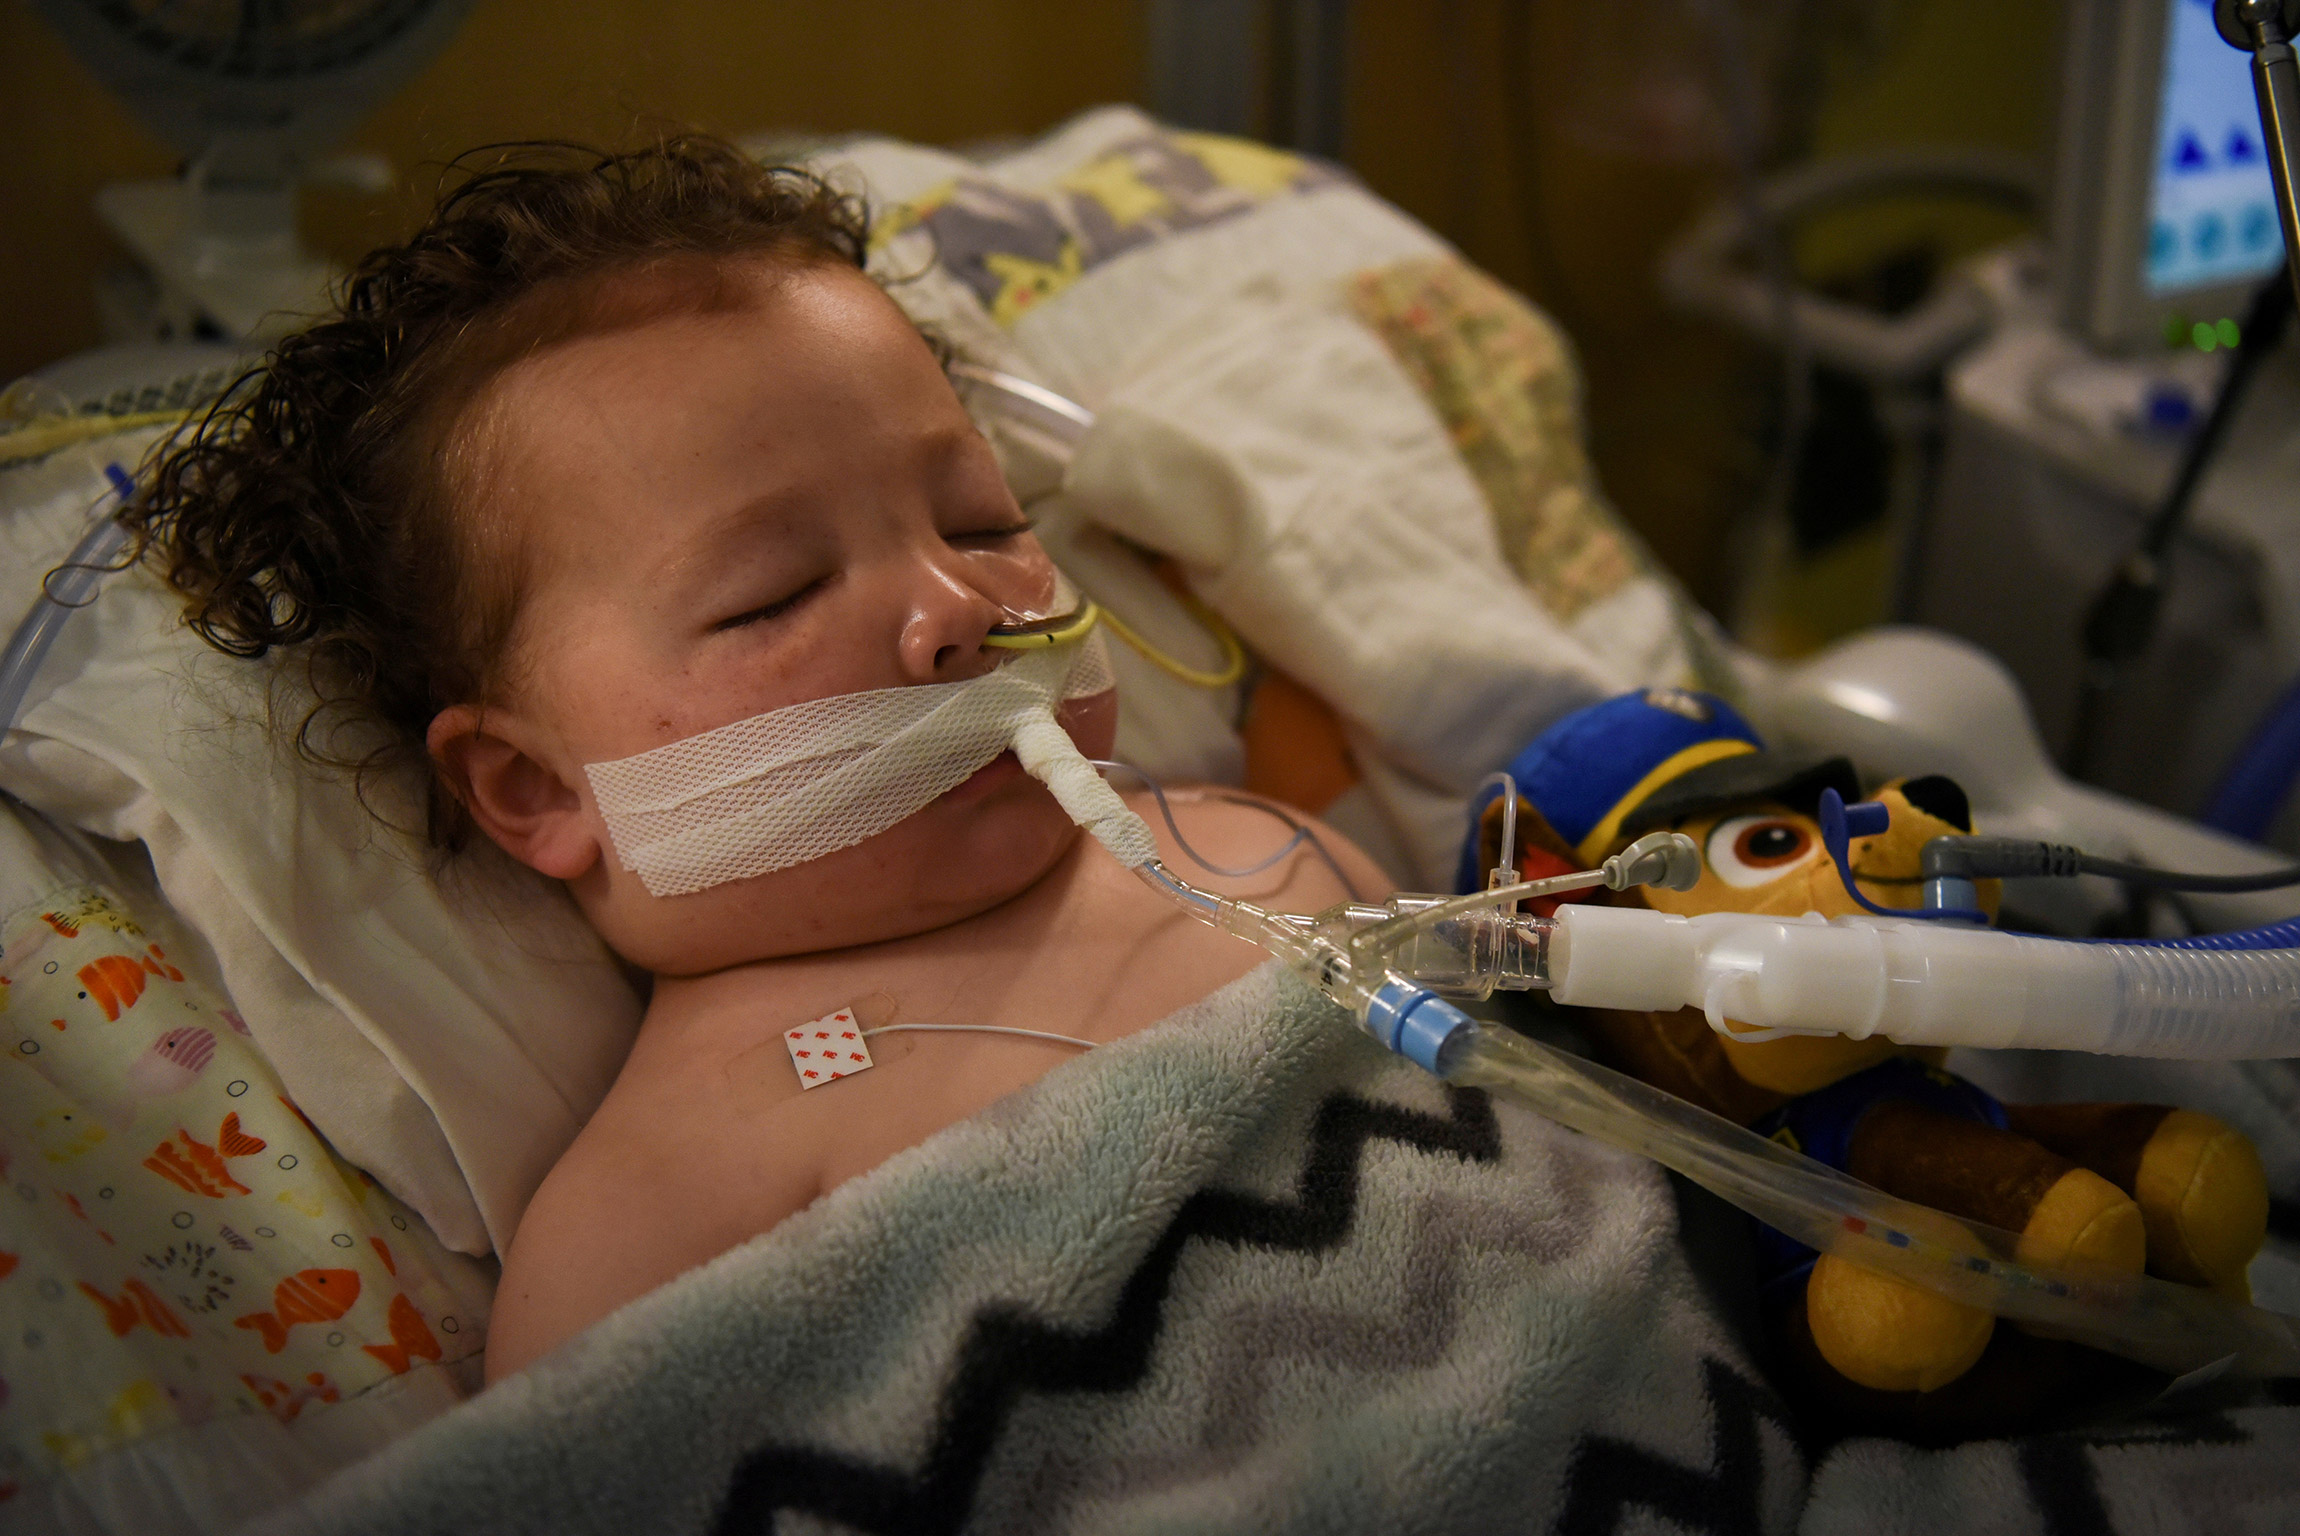 5 октября. Сент-Луис, США. Двухлетний ребенок с COVID-19 на аппарате искусственной вентиляции легких